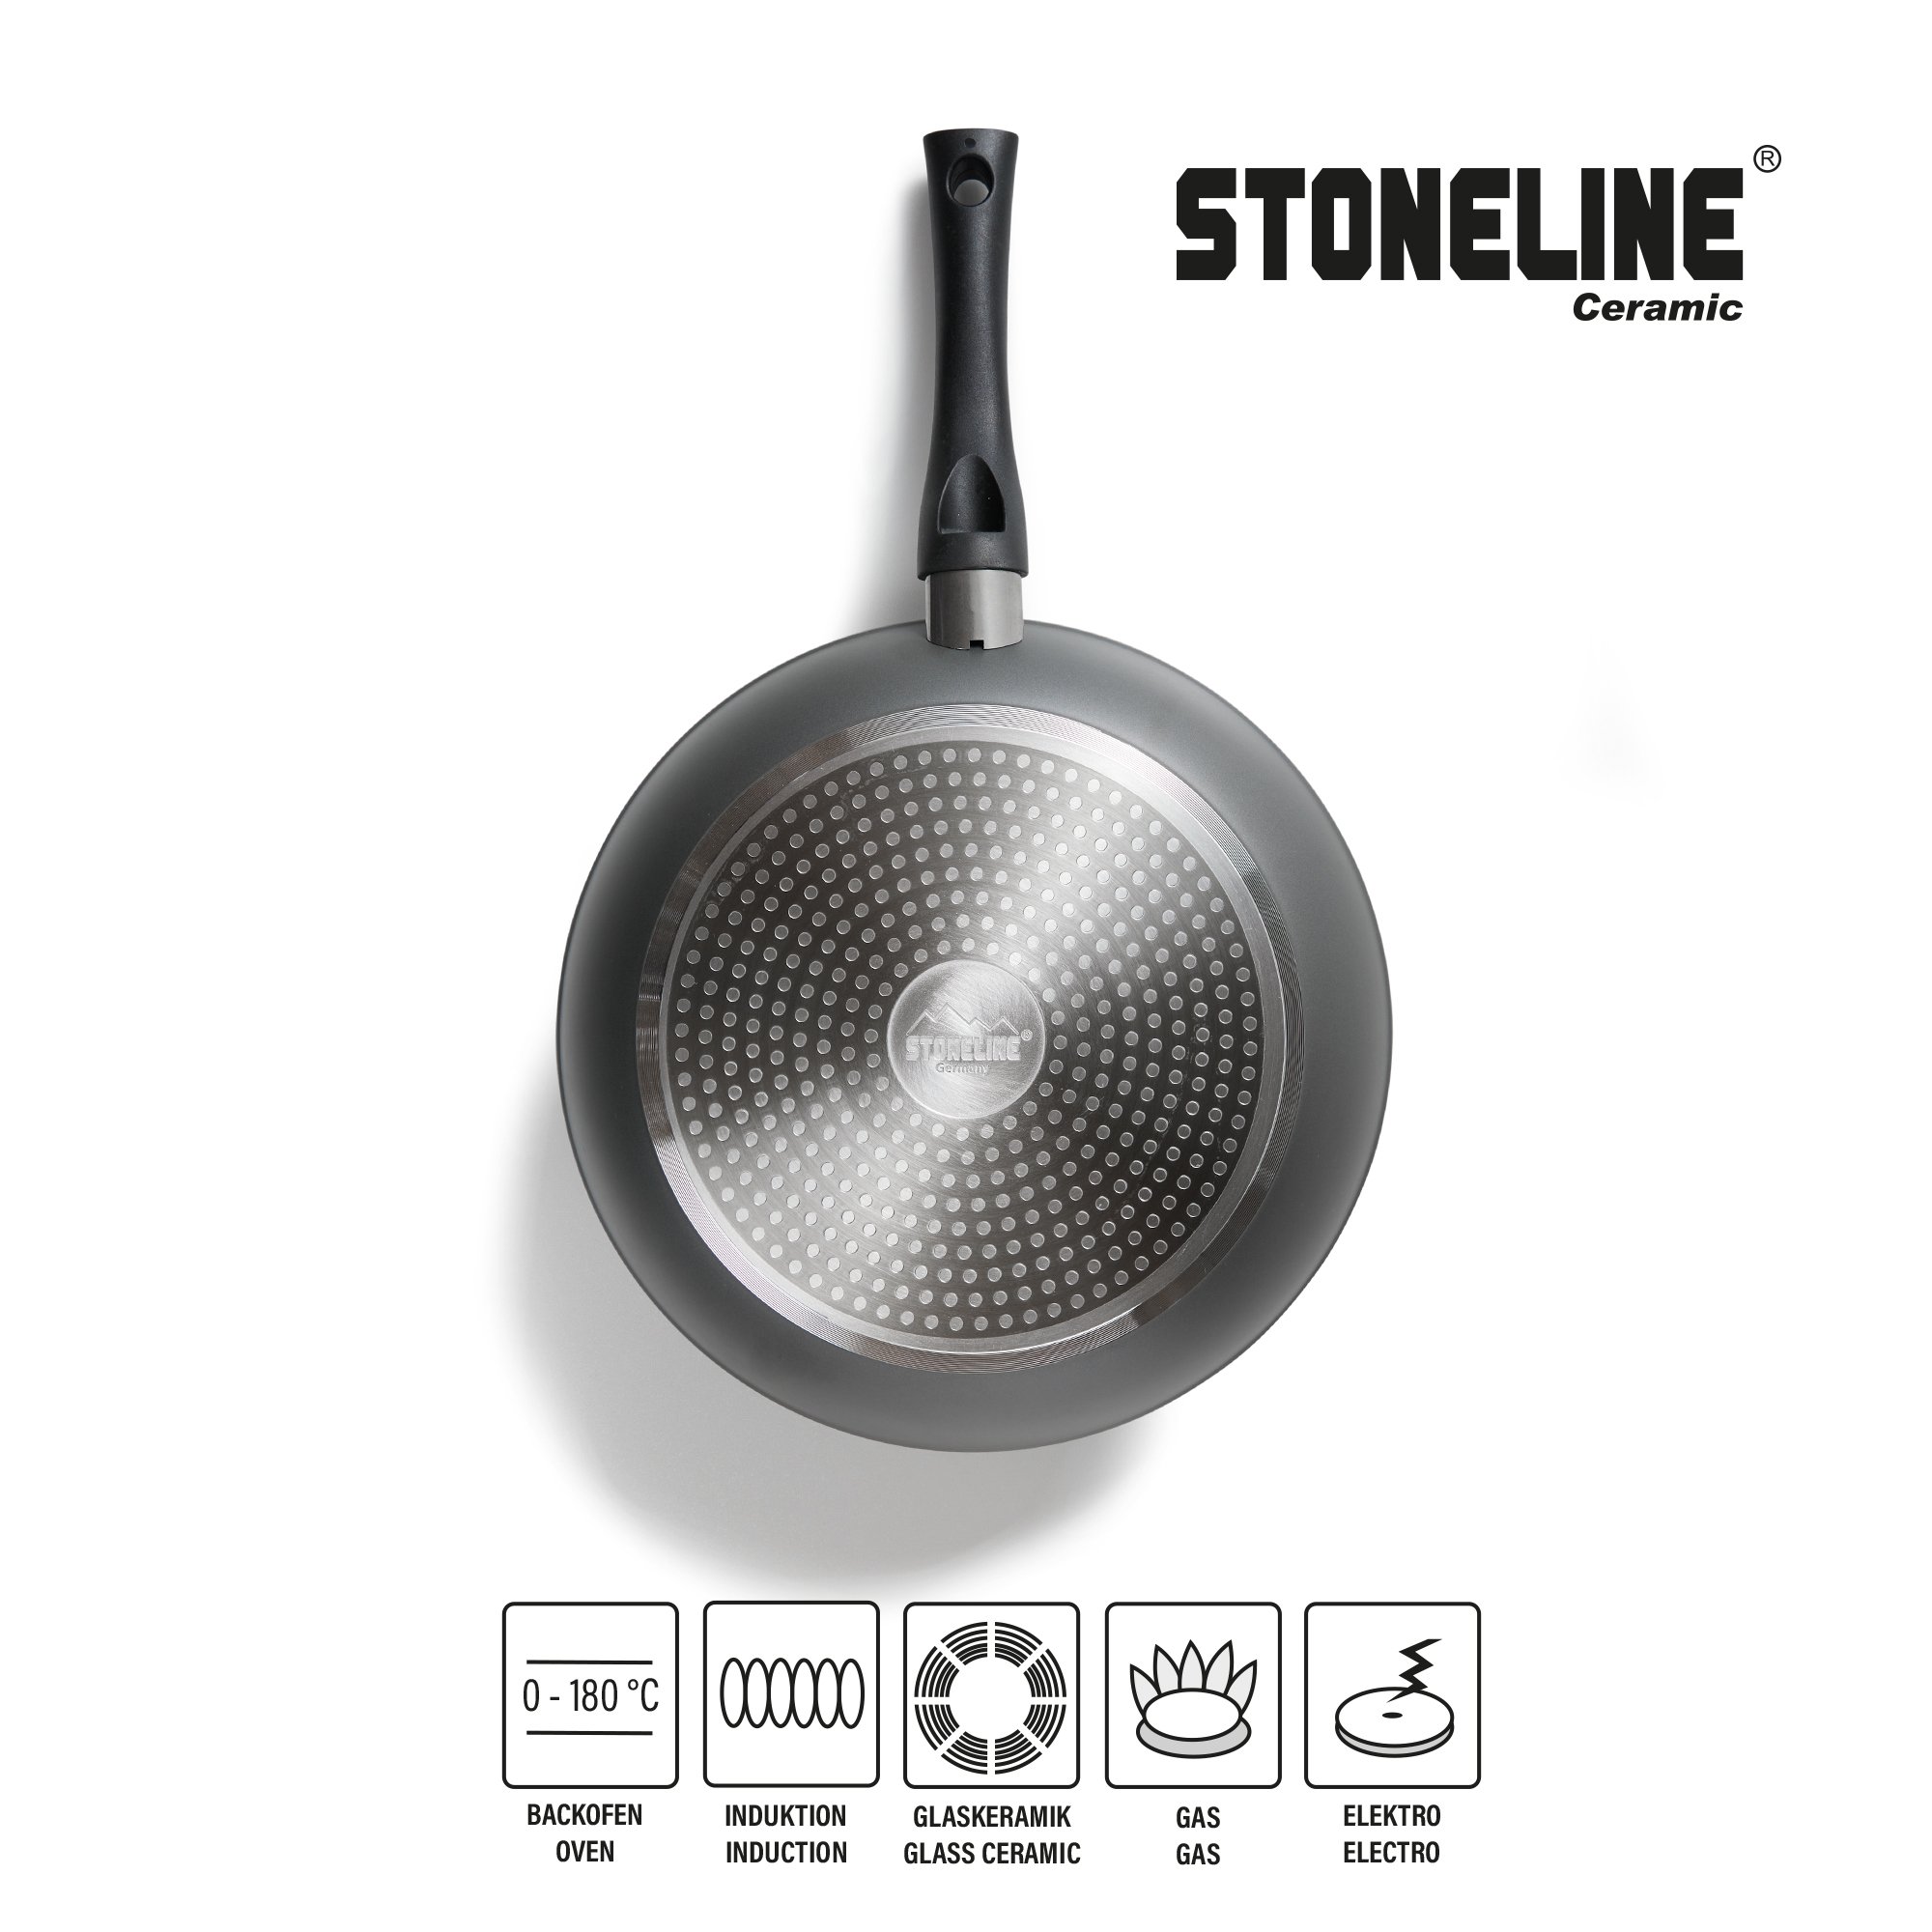 STONELINE® CERAMIC pan set, 3 pcs., 20/24/28 cm, induction and oven-safe